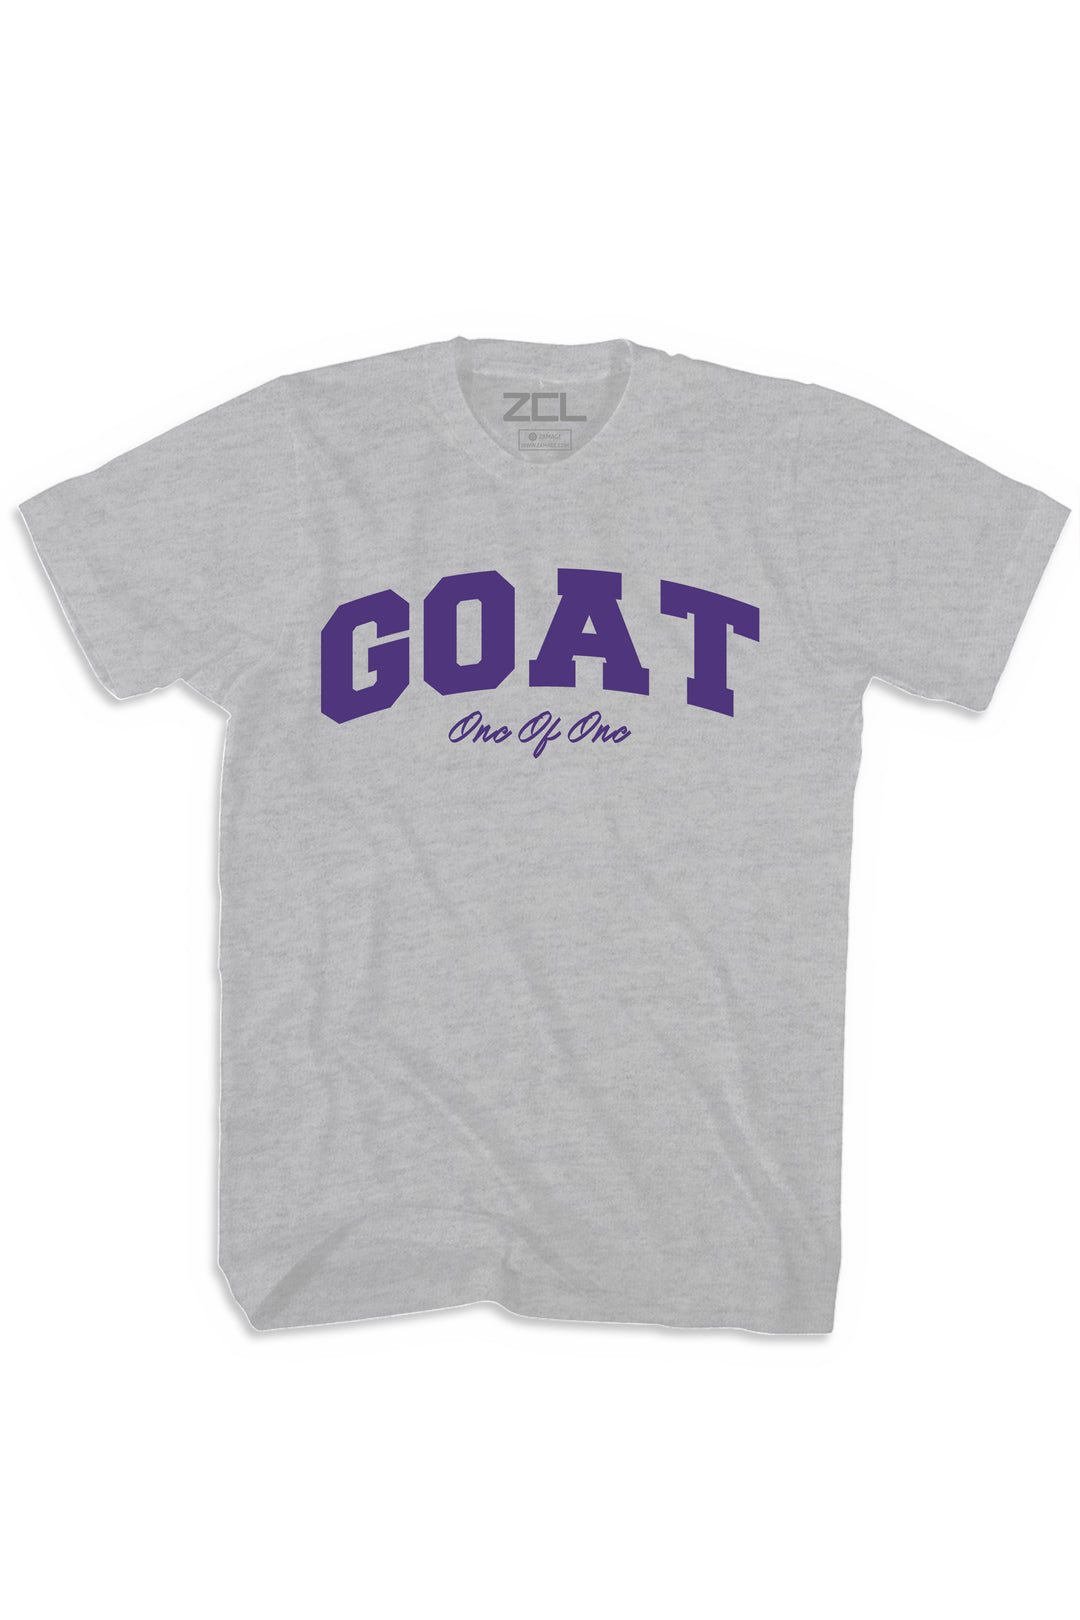 Goat Tee (Purple Logo) - Zamage